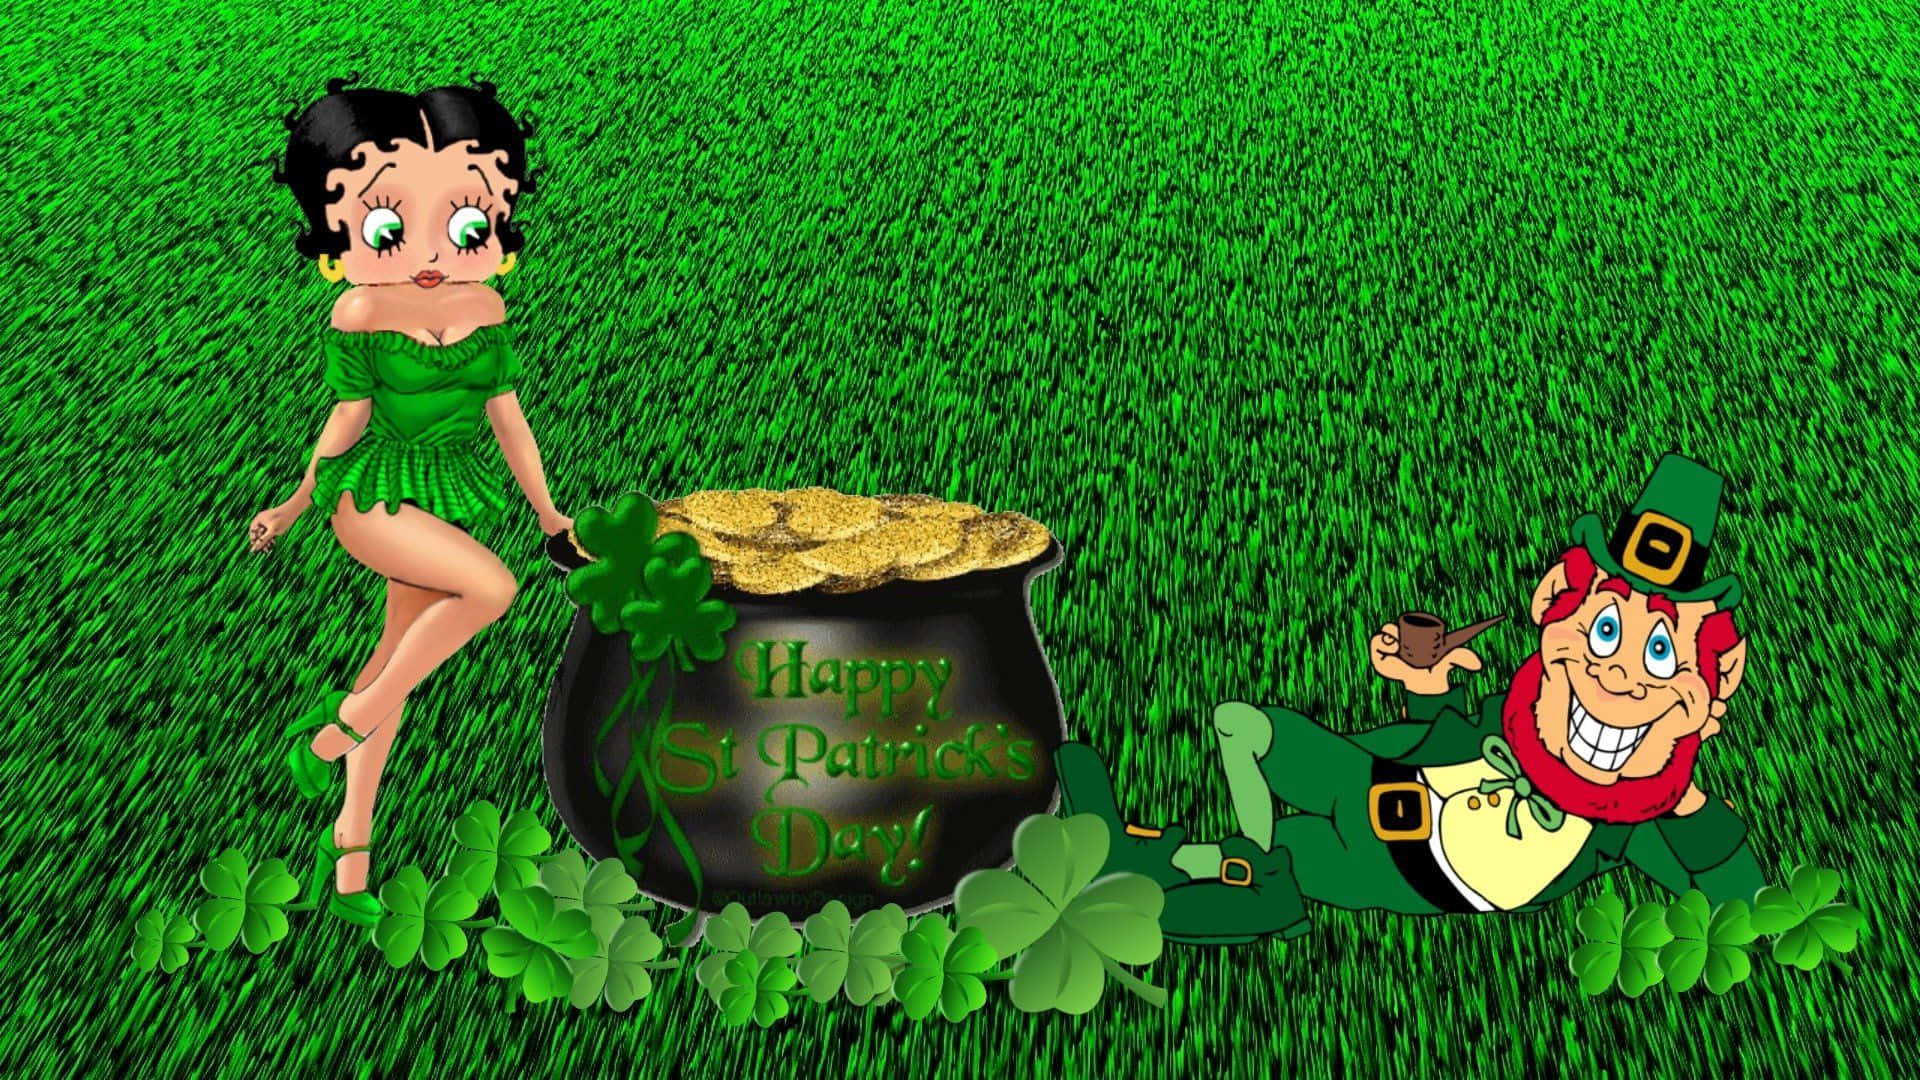 Bettyboop Och Leprechaun St. Patrick's Day Bakgrundsbild.